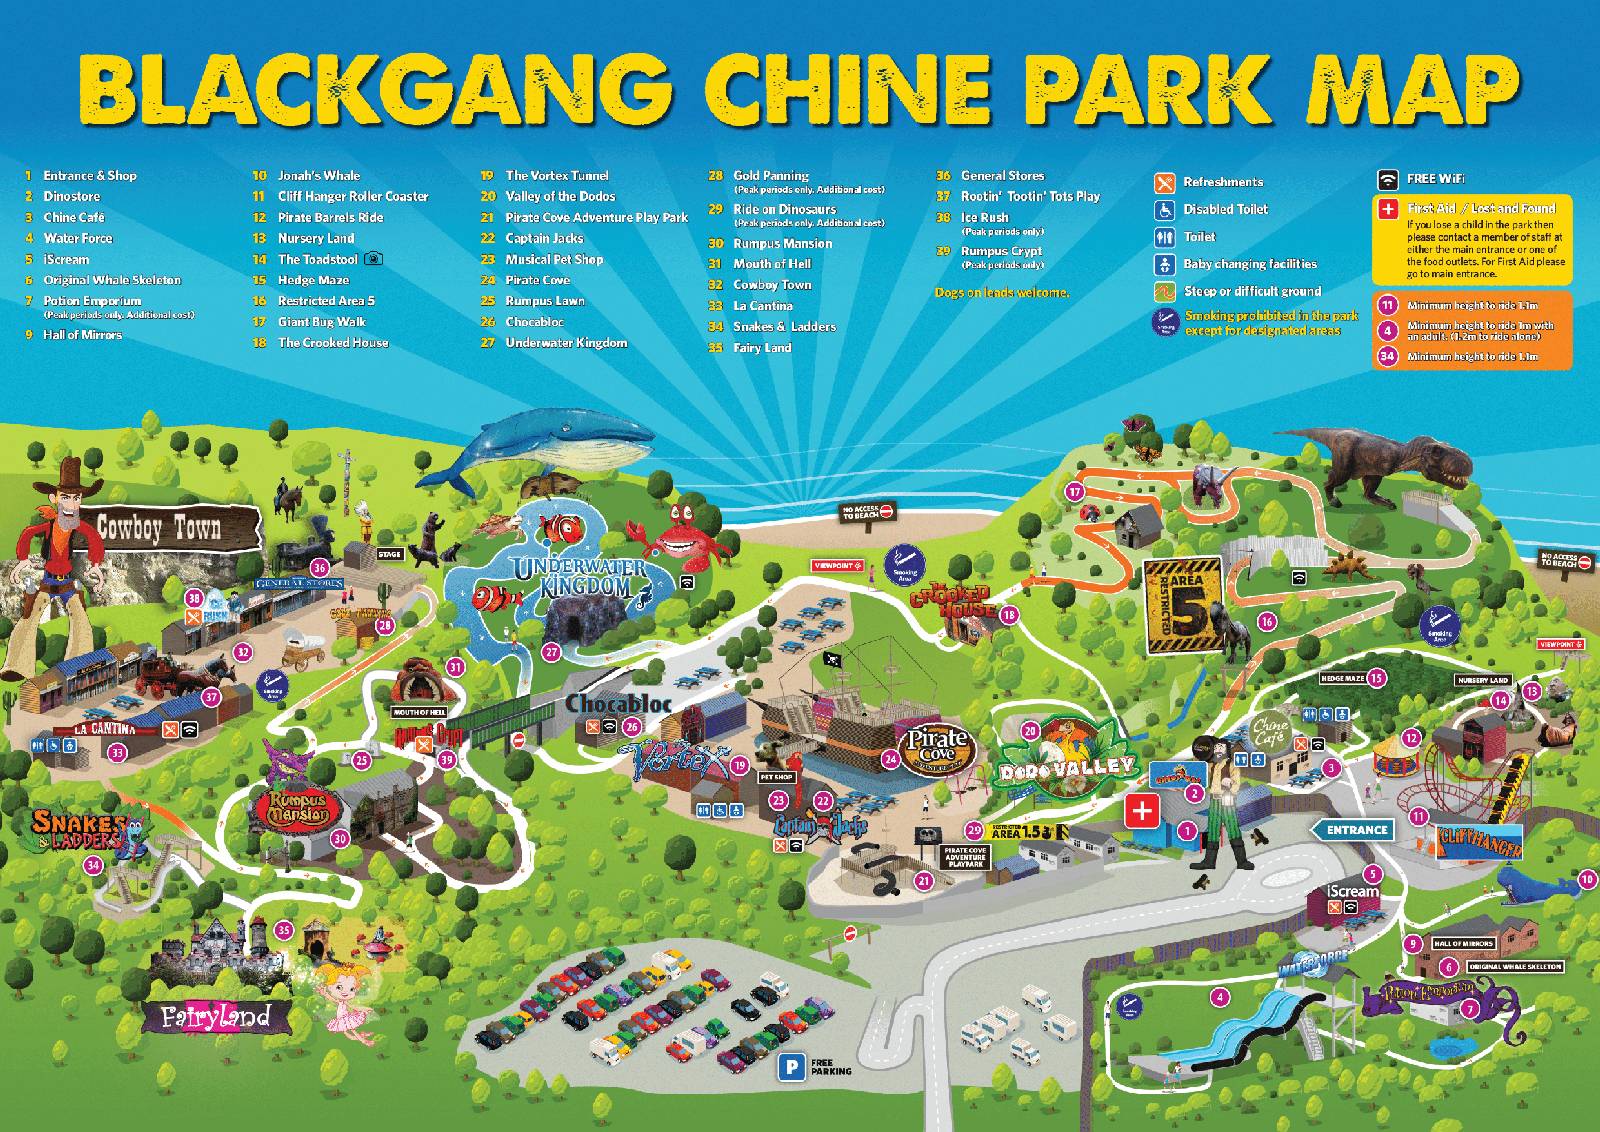 Map of Blackgang Chine